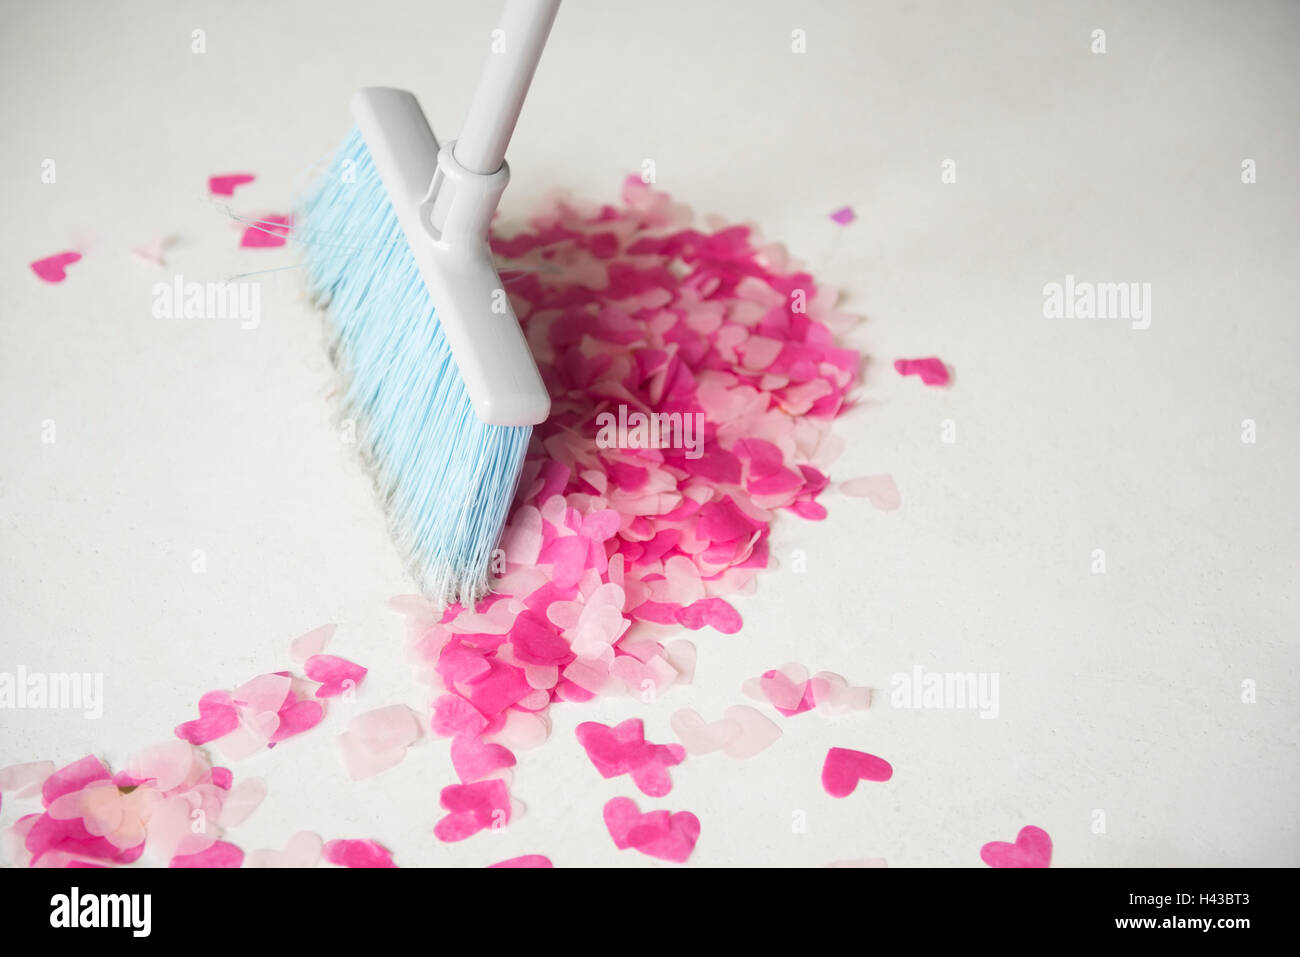 Broom sweeping heart-shape confetti on floor Stock Photo